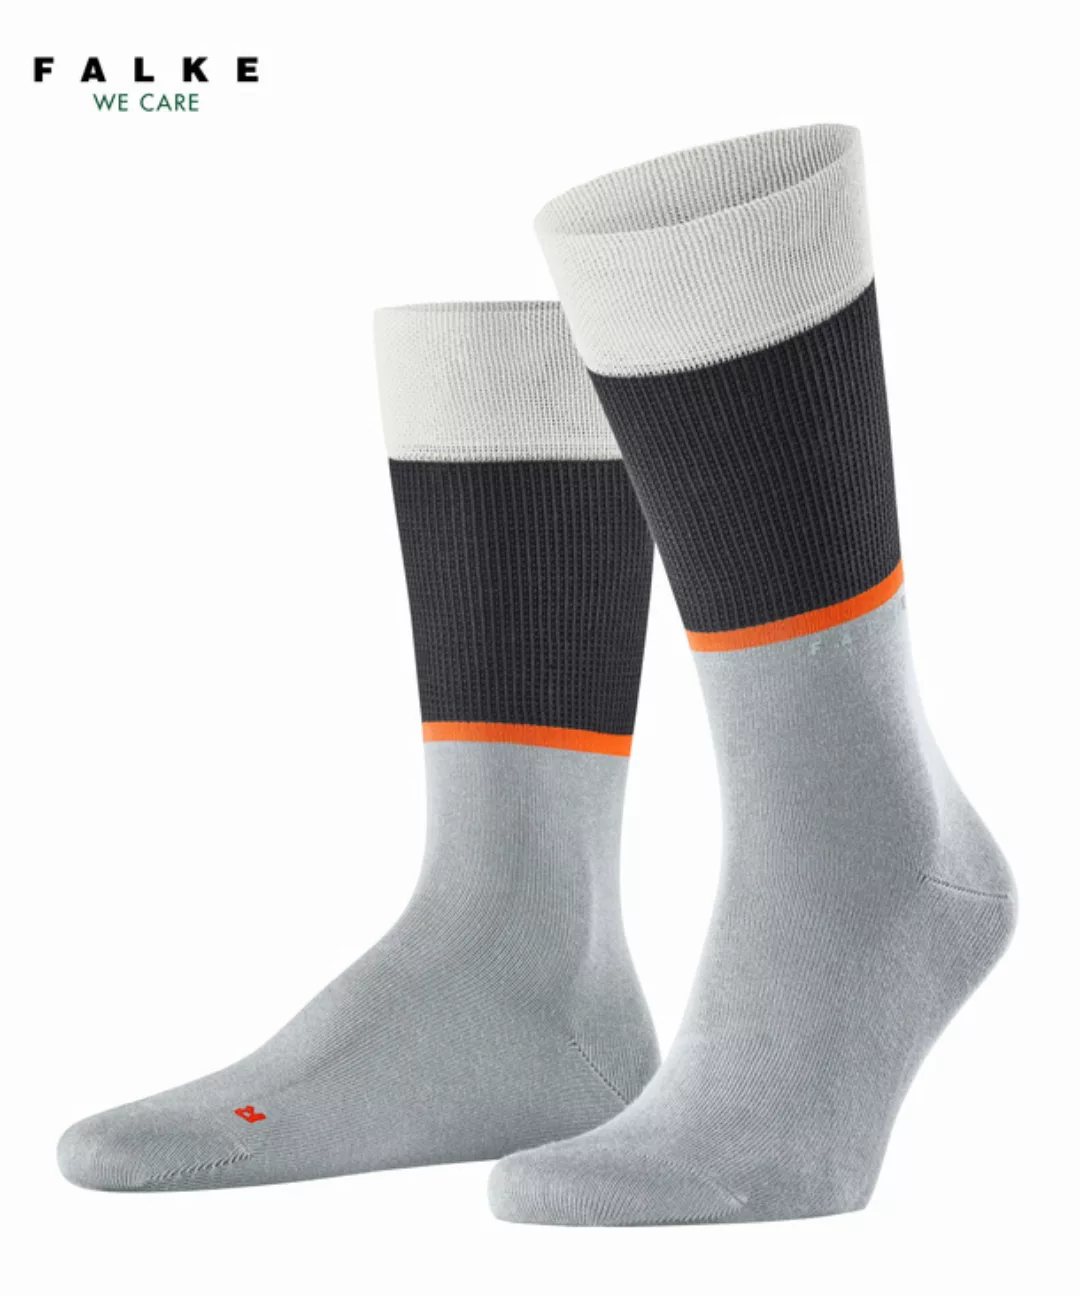 FALKE Unlimited Socken, 44-45, Grau, Mehrfarbig, Baumwolle (Bio), 12485-329 günstig online kaufen